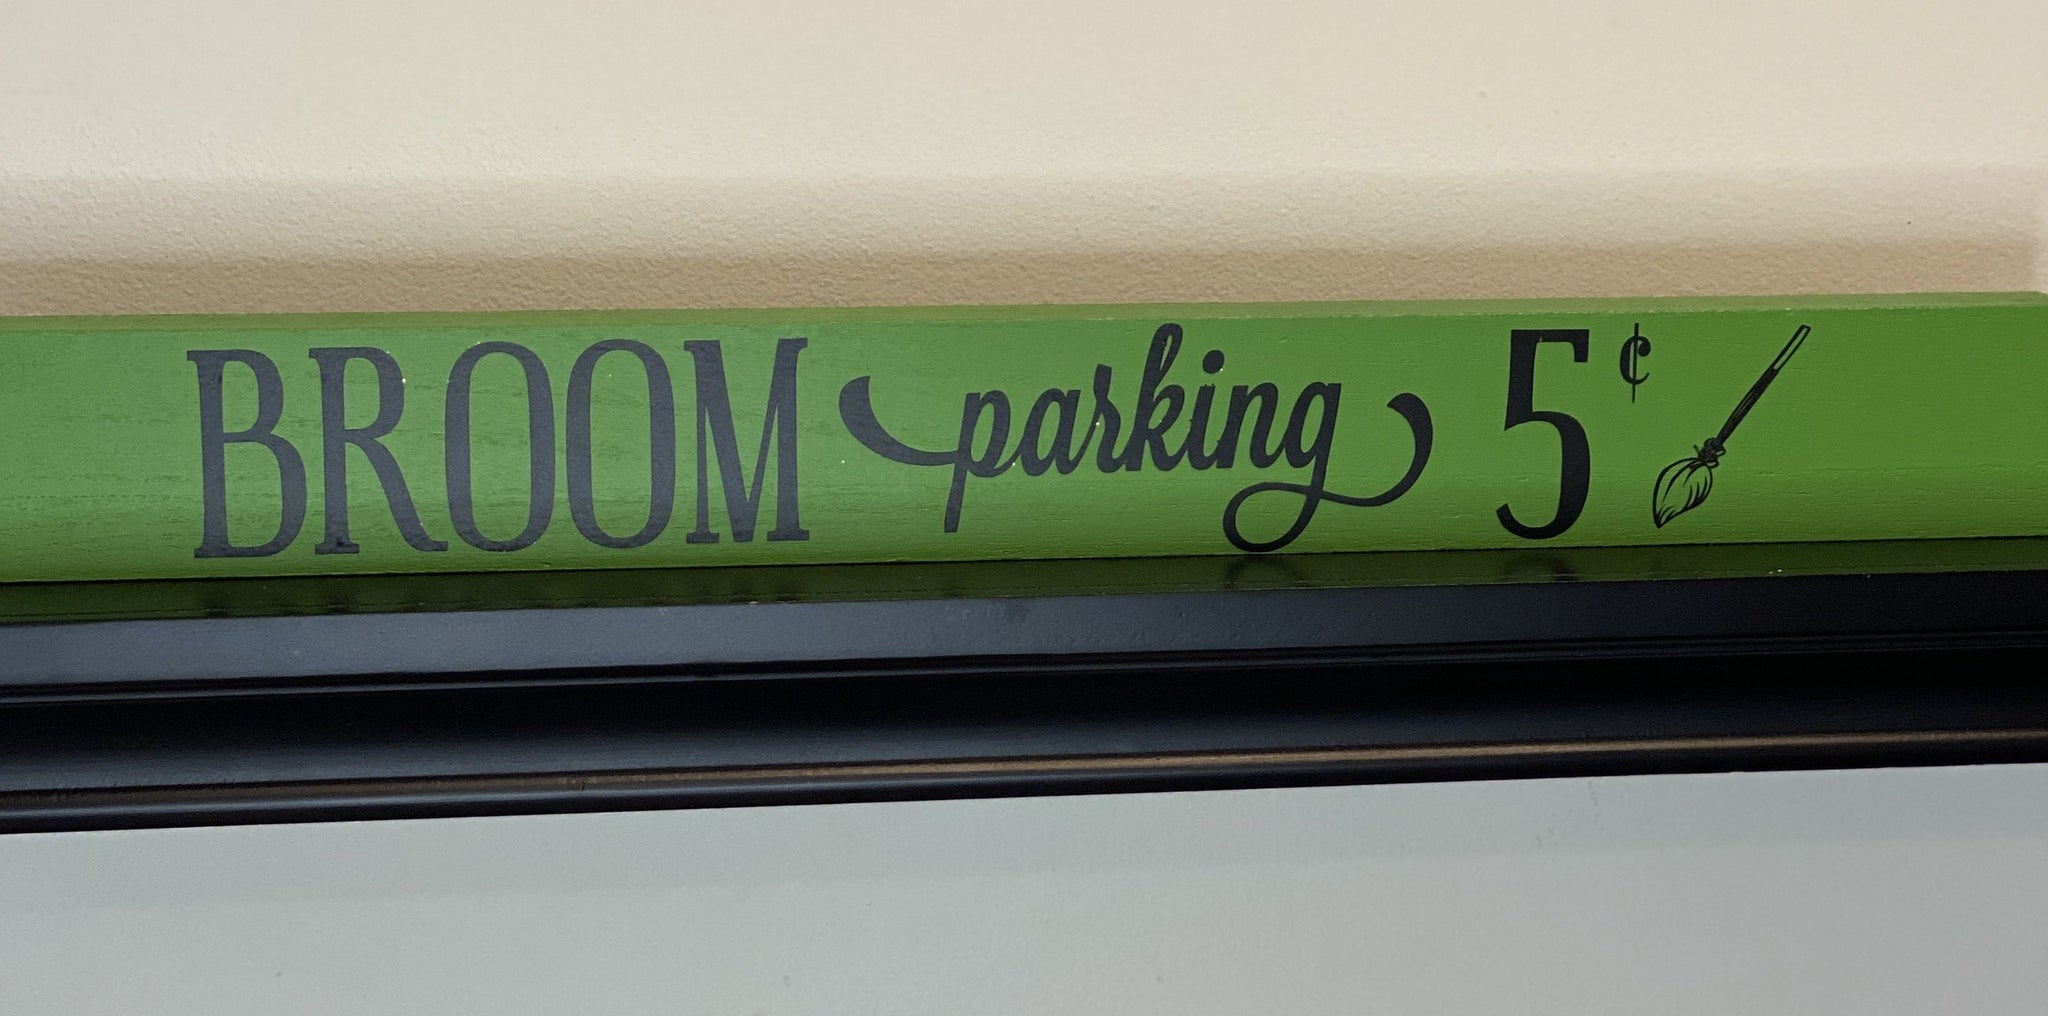 Broom Parking 5 cents Sign